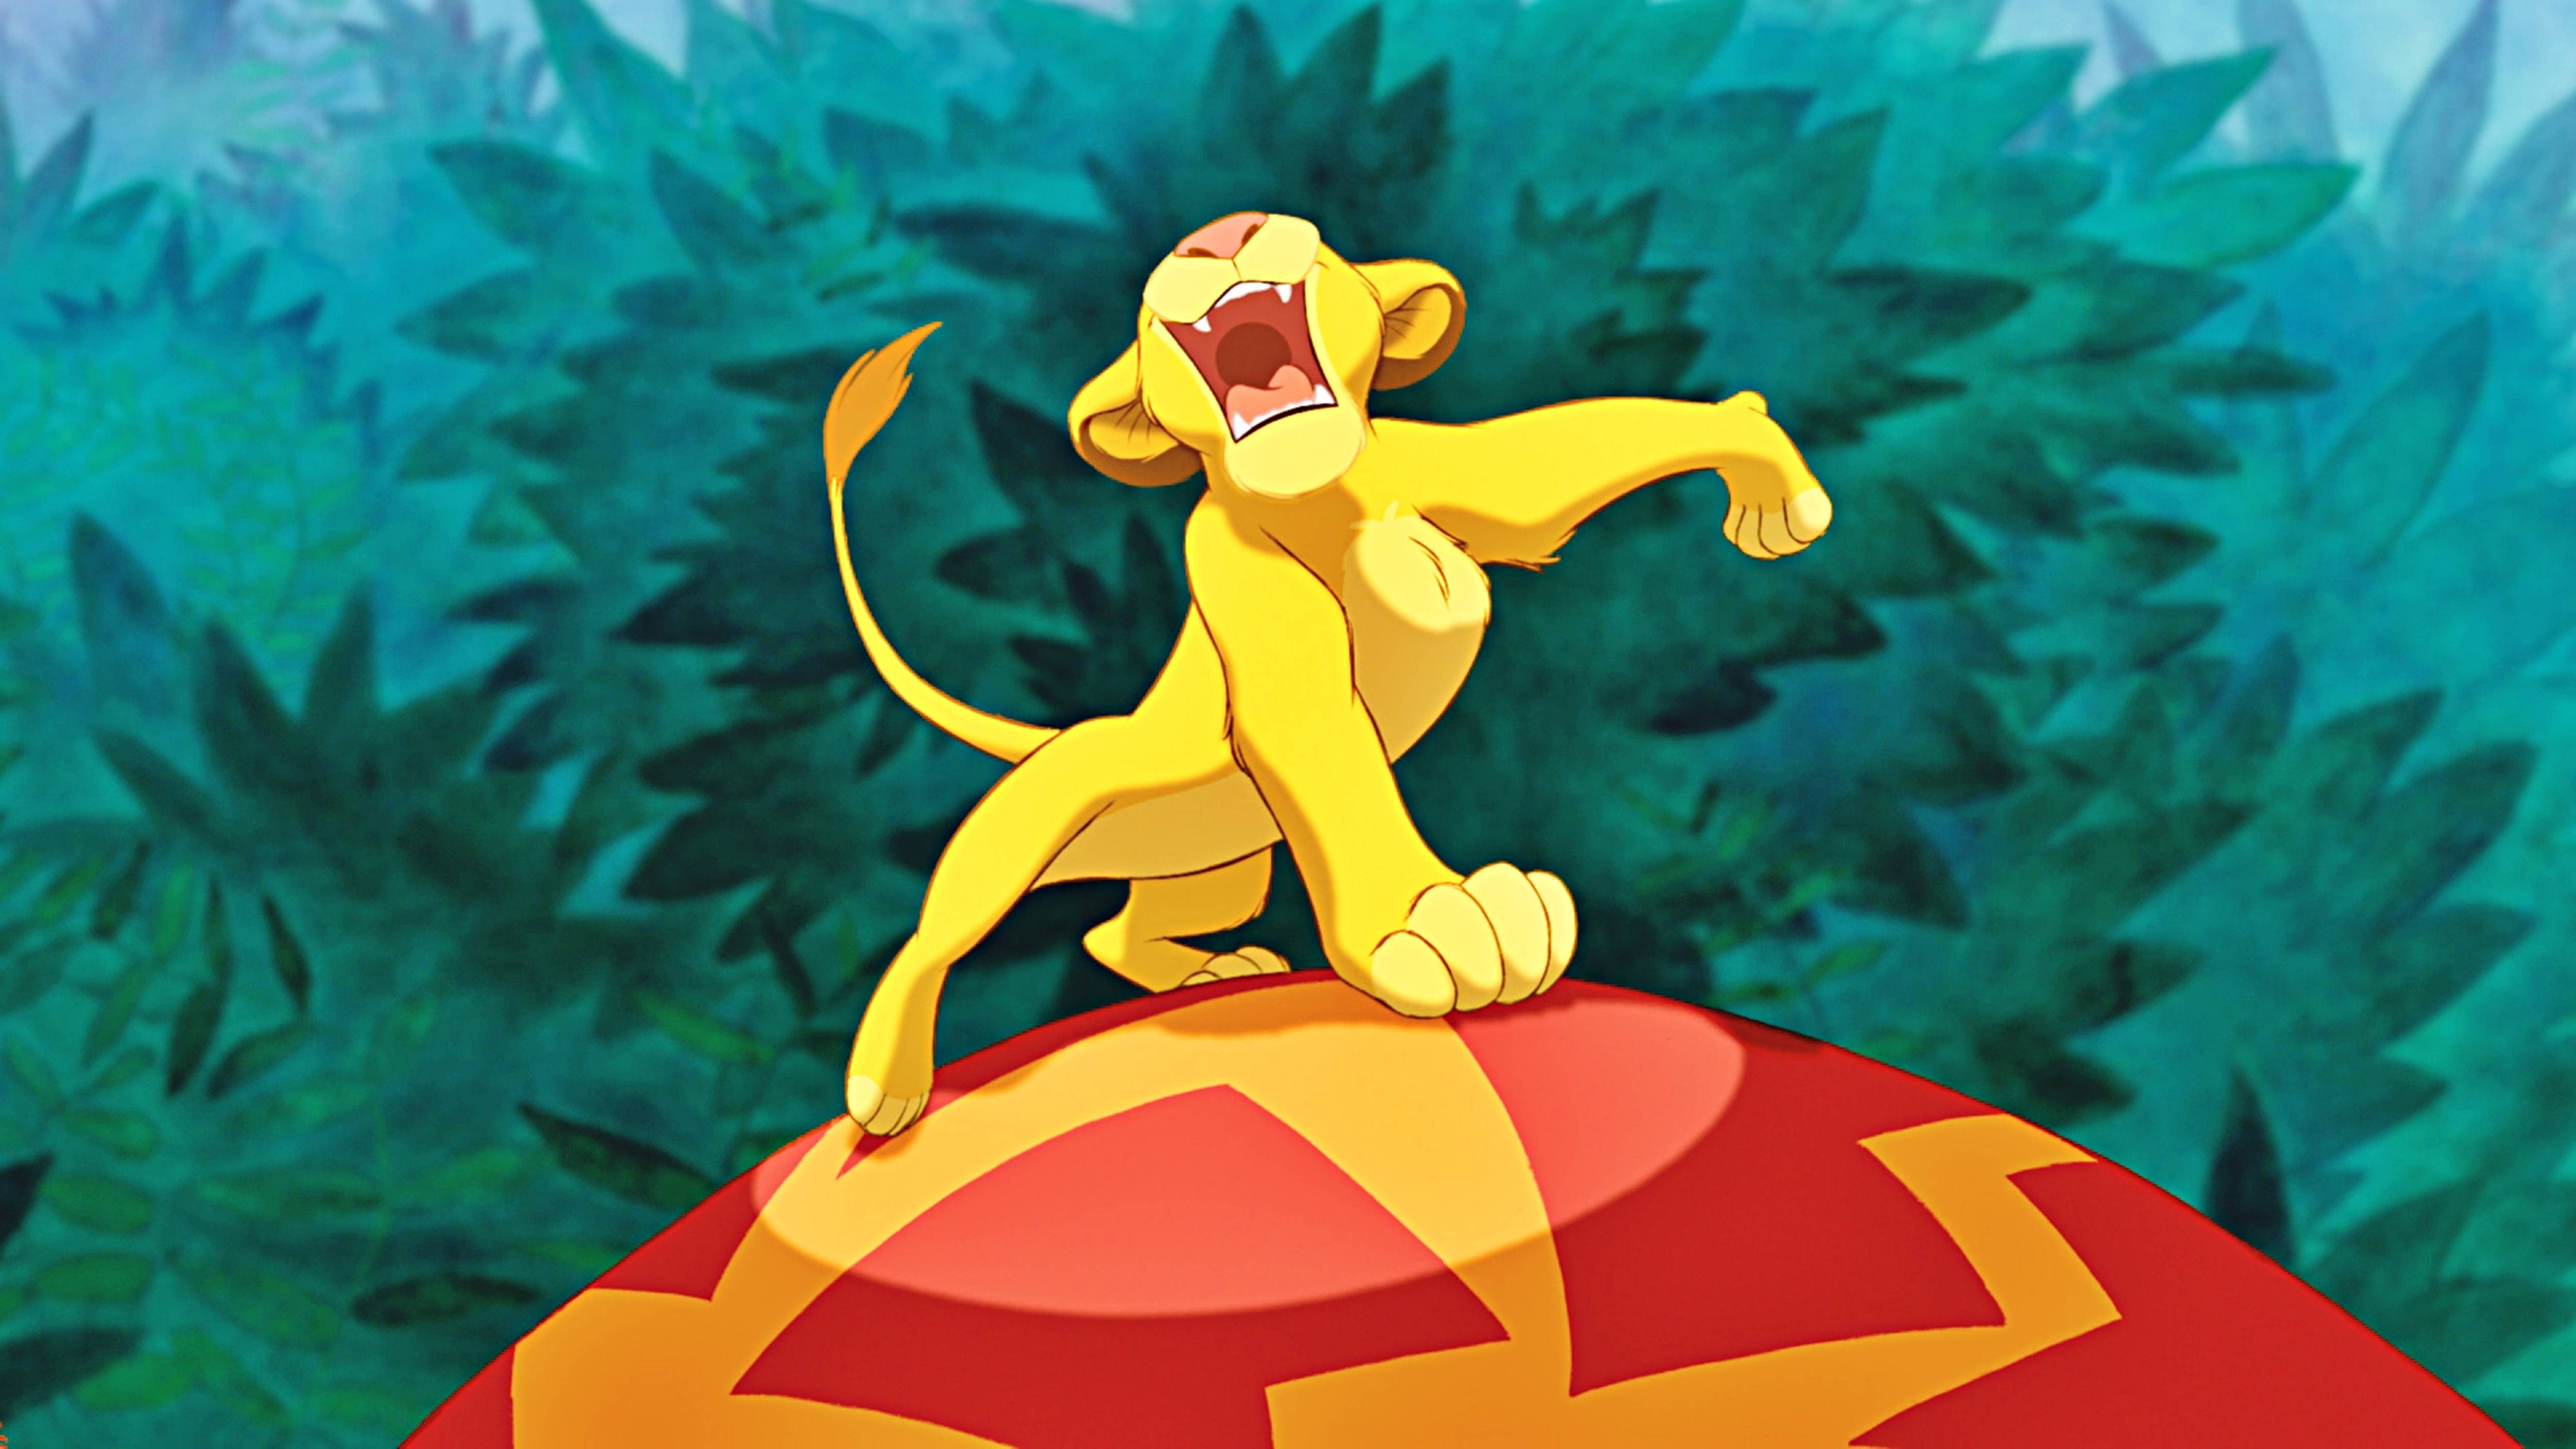 Simba HD image. The Lion King wallpaper